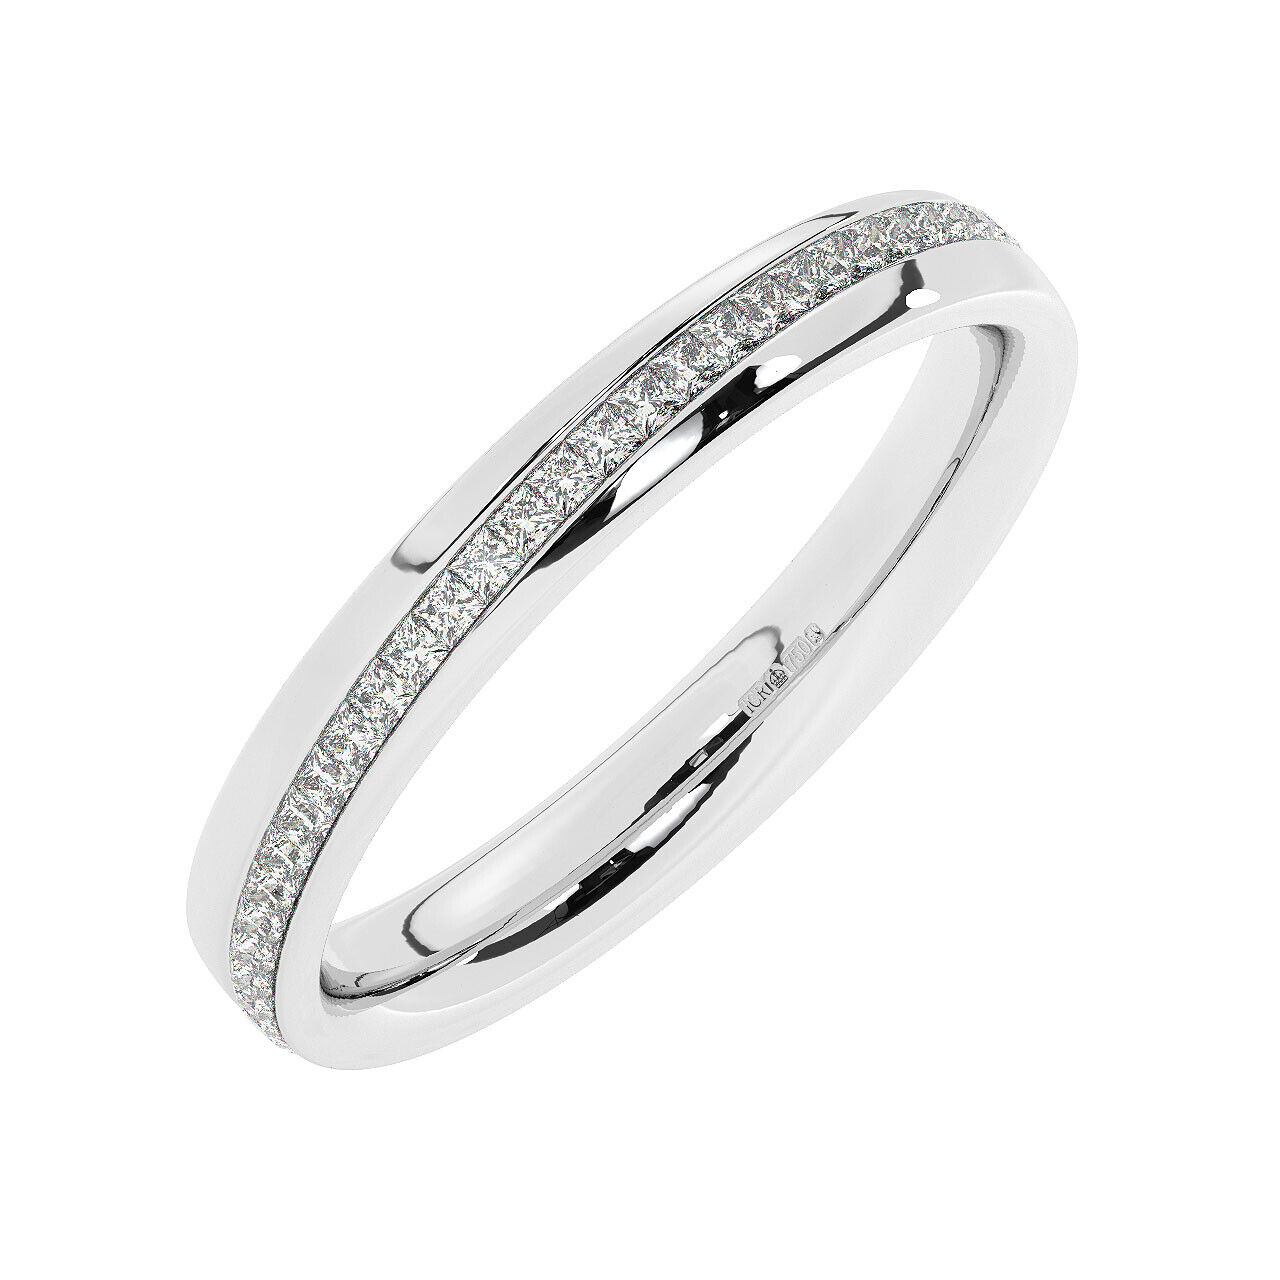 3.0MM 100% Natural Princess Cut Diamond Full Eternity Ring in Gold & Platinum